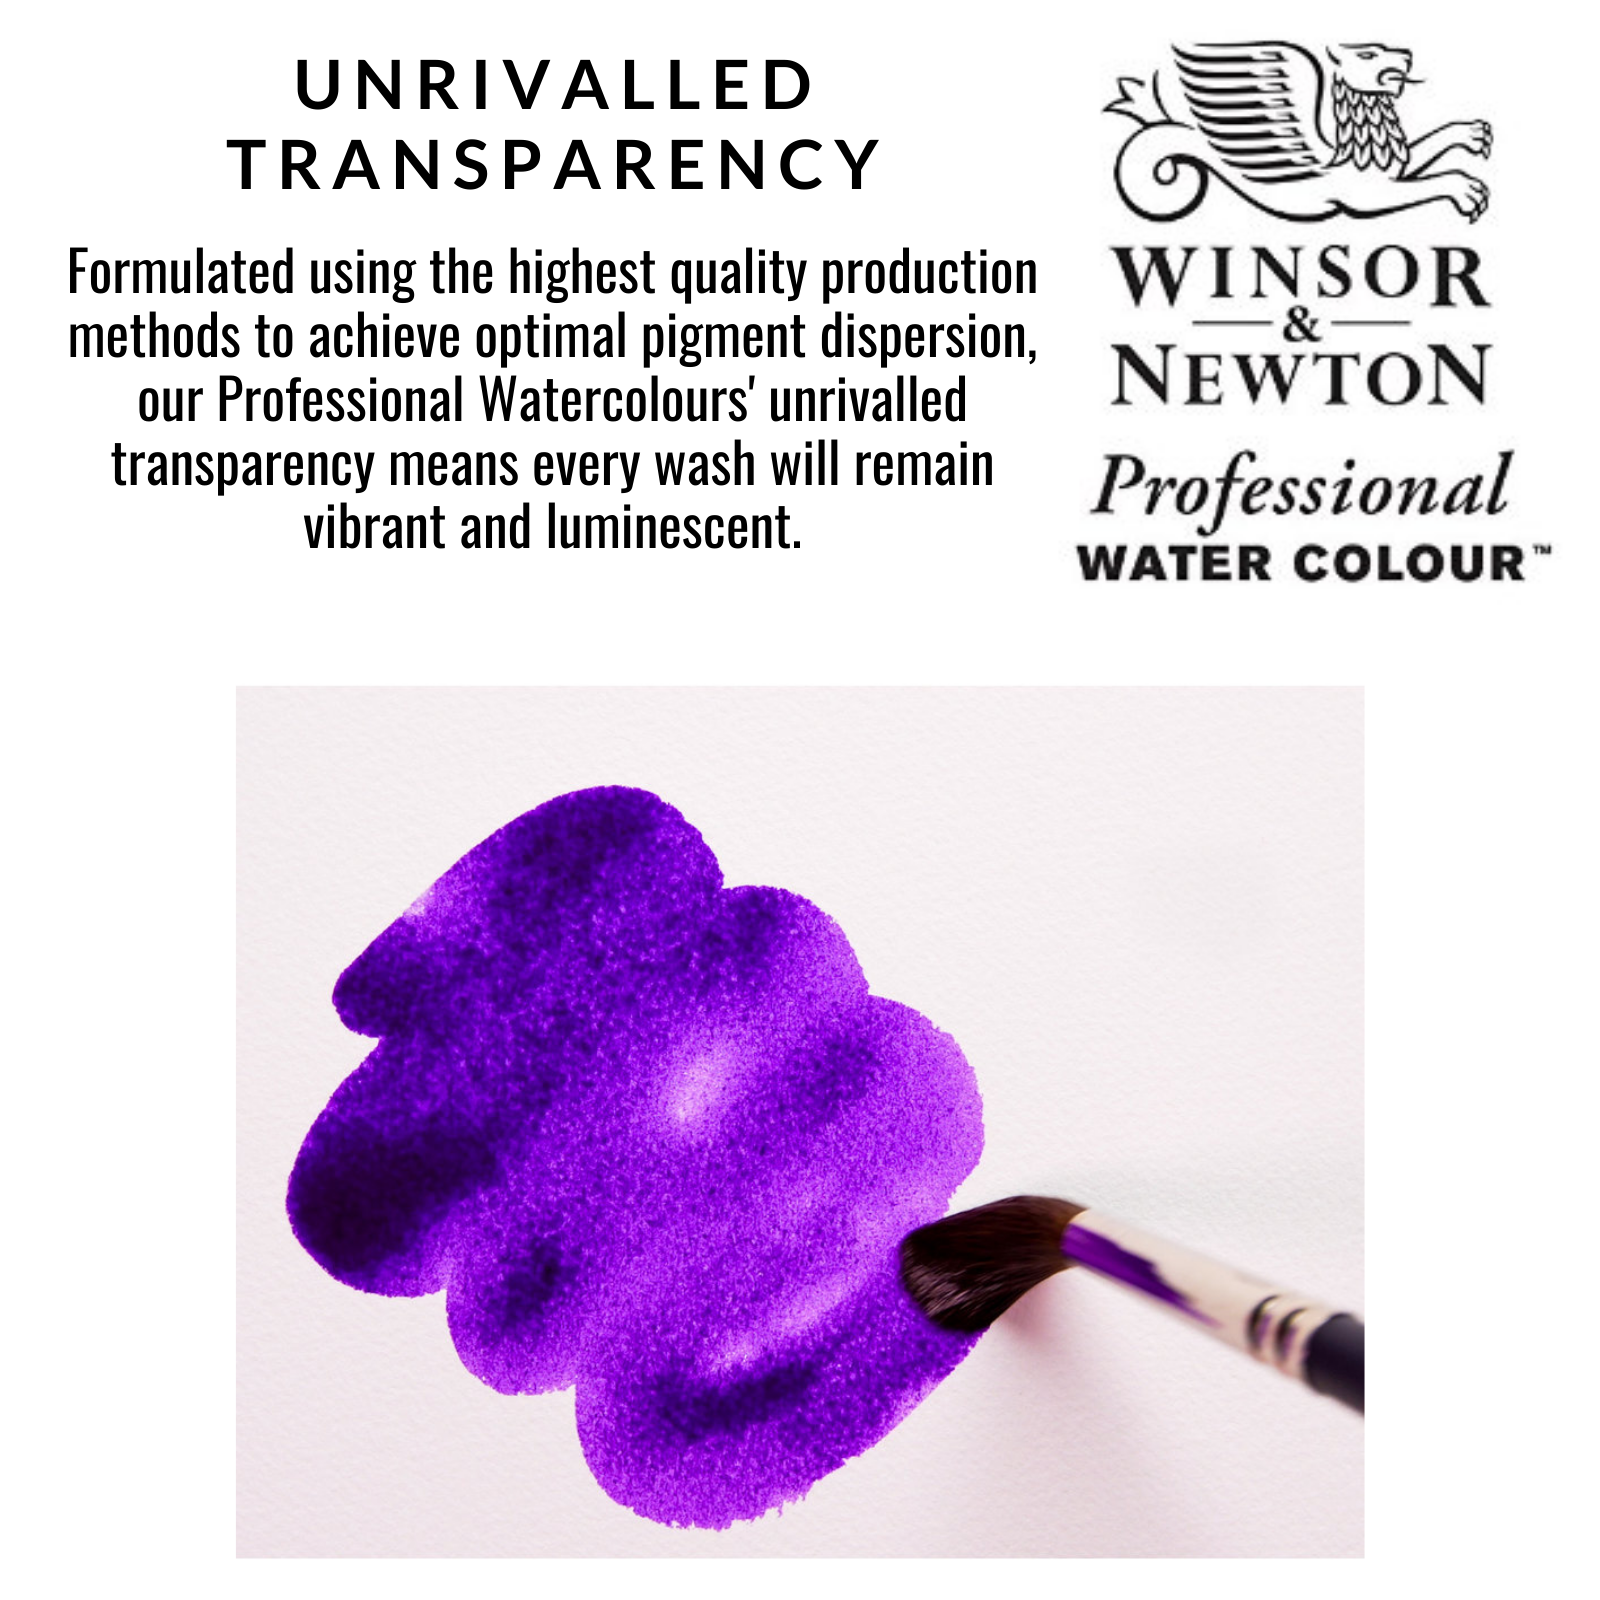 Winsor & Newton Professional Watercolor Tubes